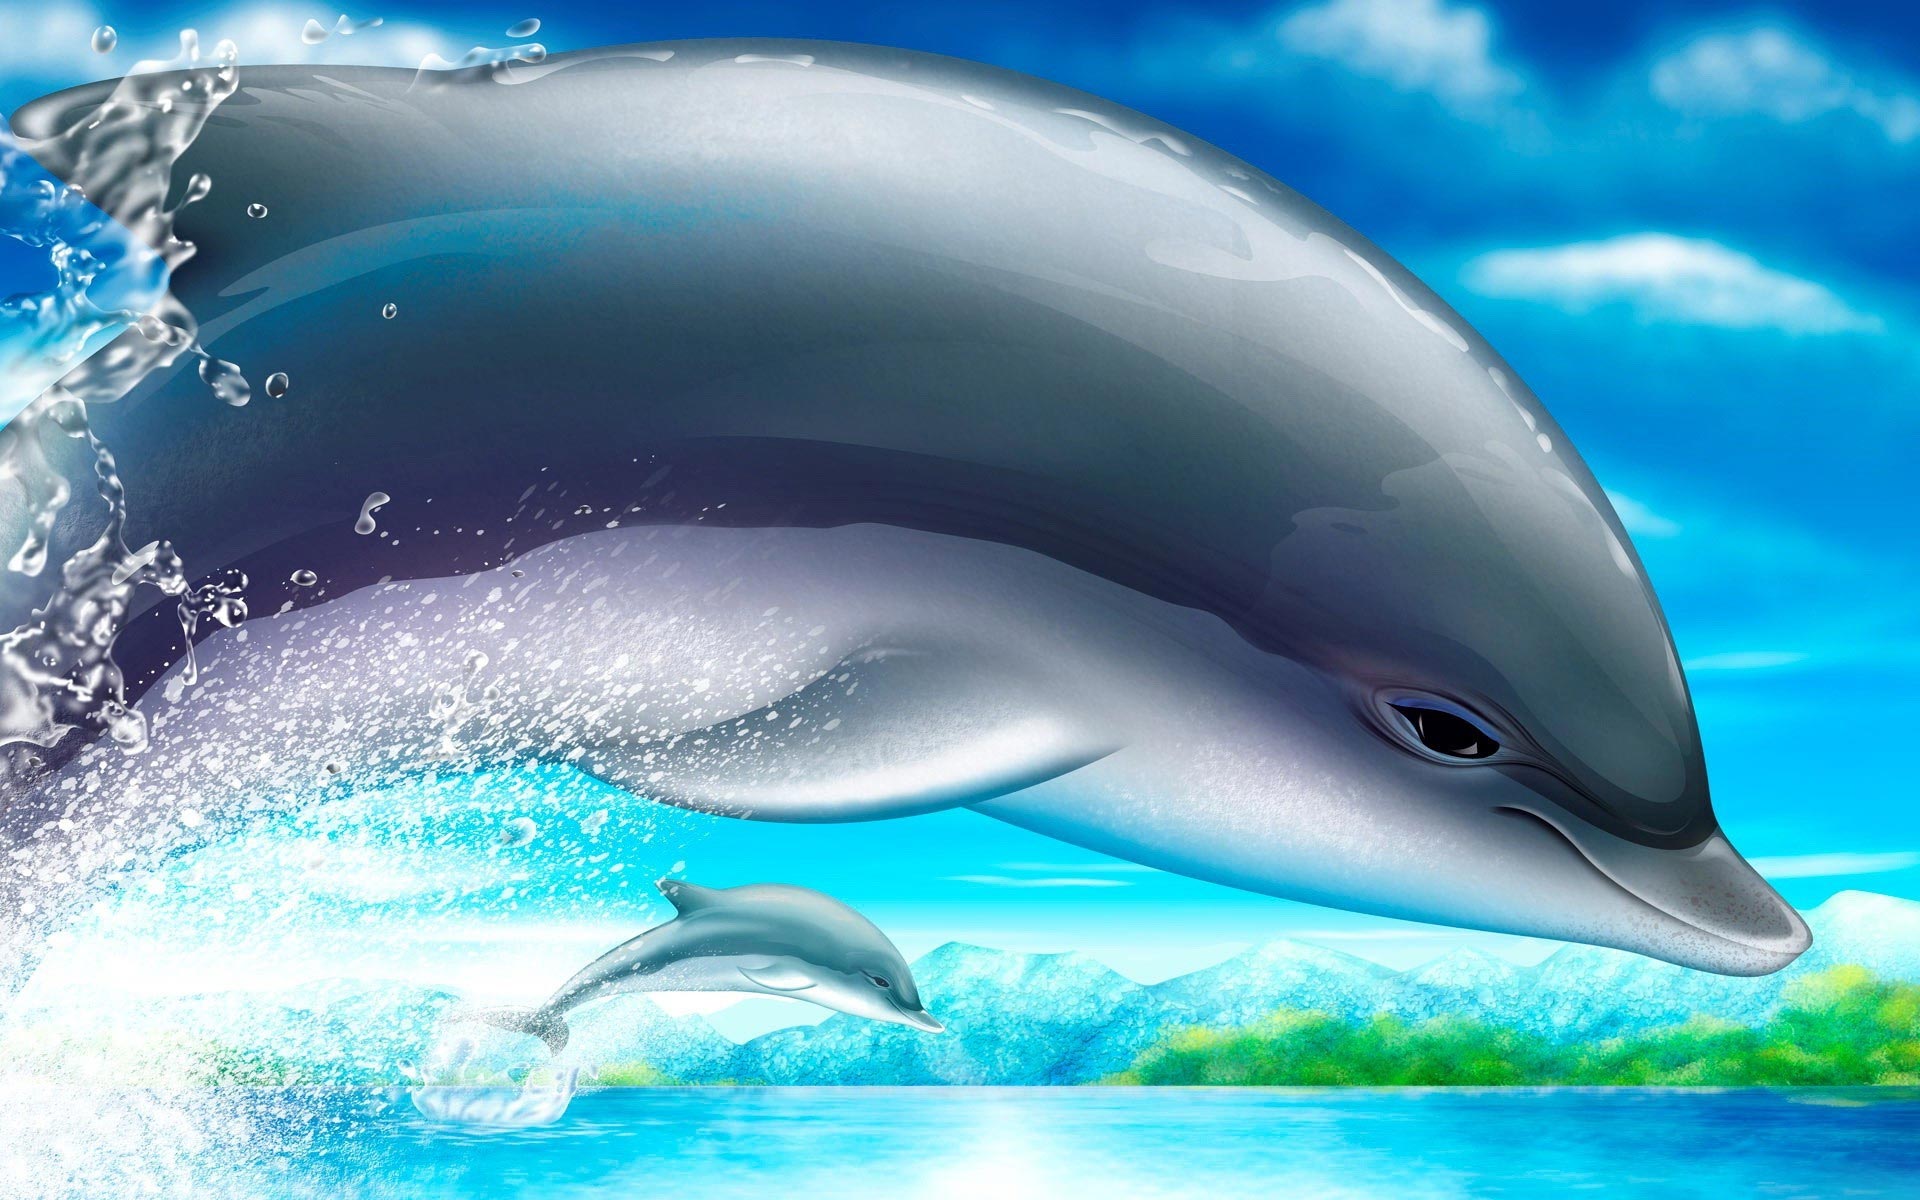 2429 Dolphin Heart Images Stock Photos  Vectors  Shutterstock